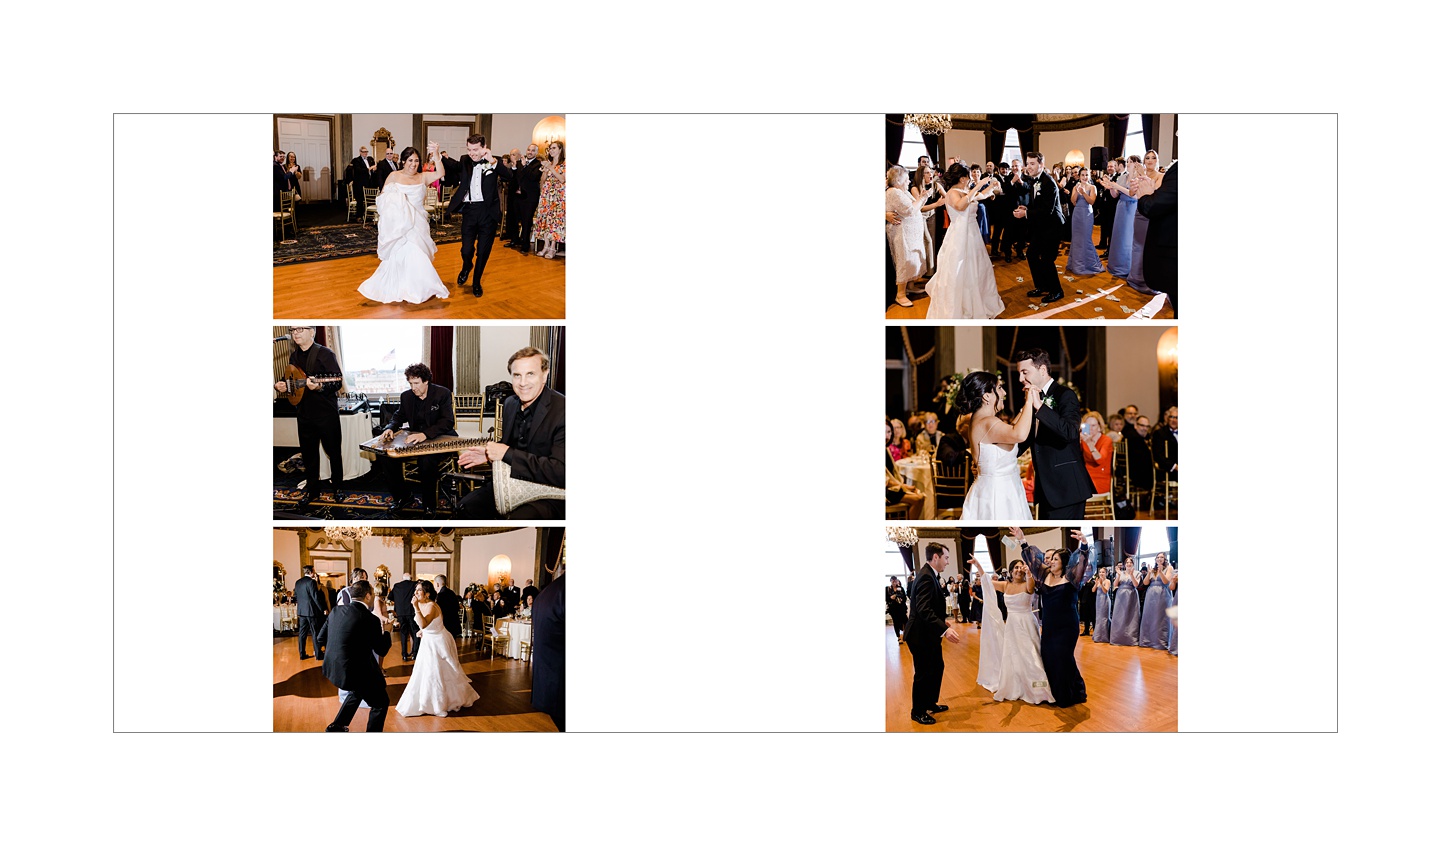 Graduate Providence wedding storybook album created by Rhode Island wedding photographer Sara Zarrella Photography